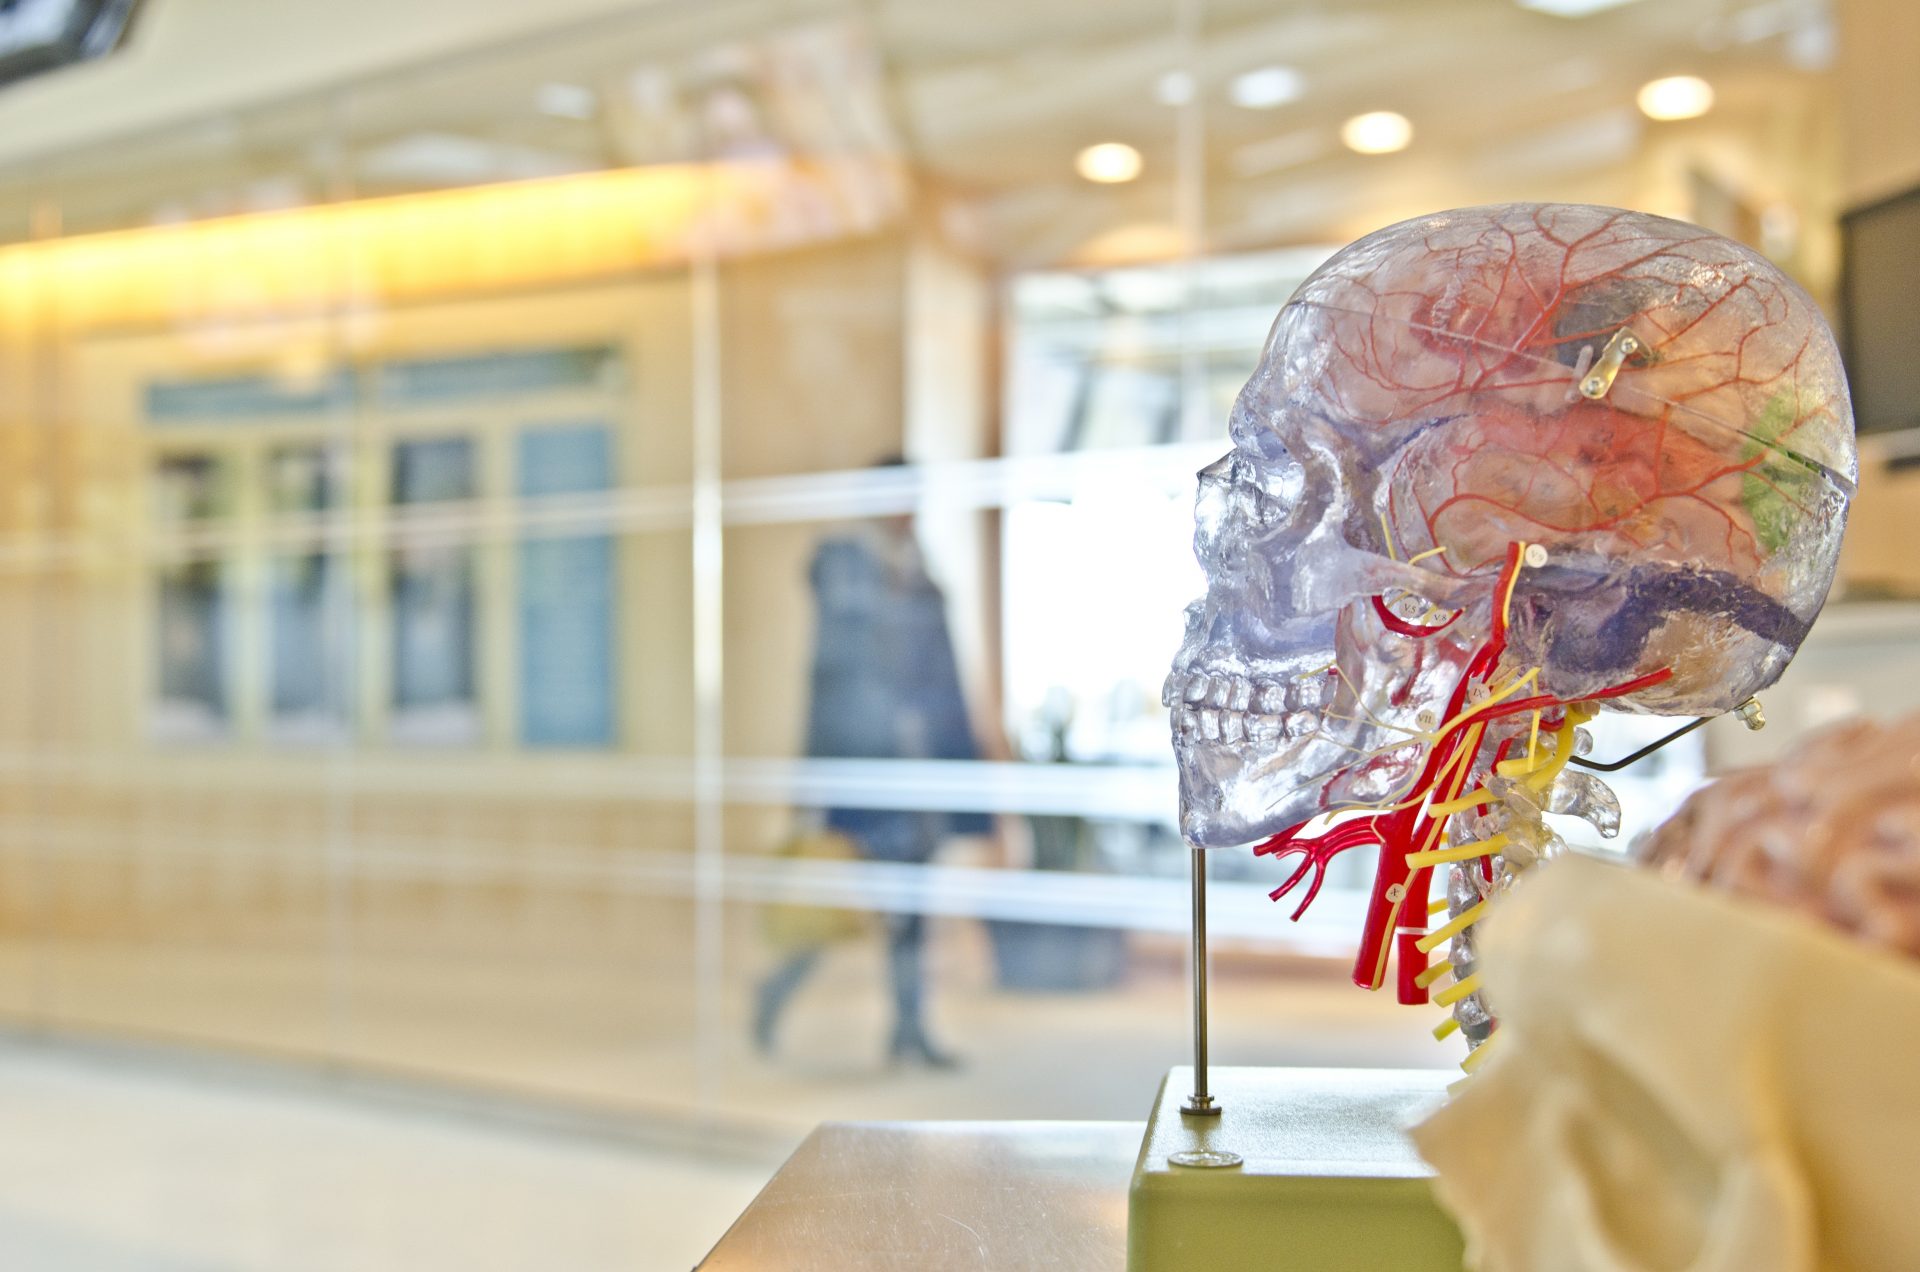 stroke, traumatic brain injury and medical marijuana